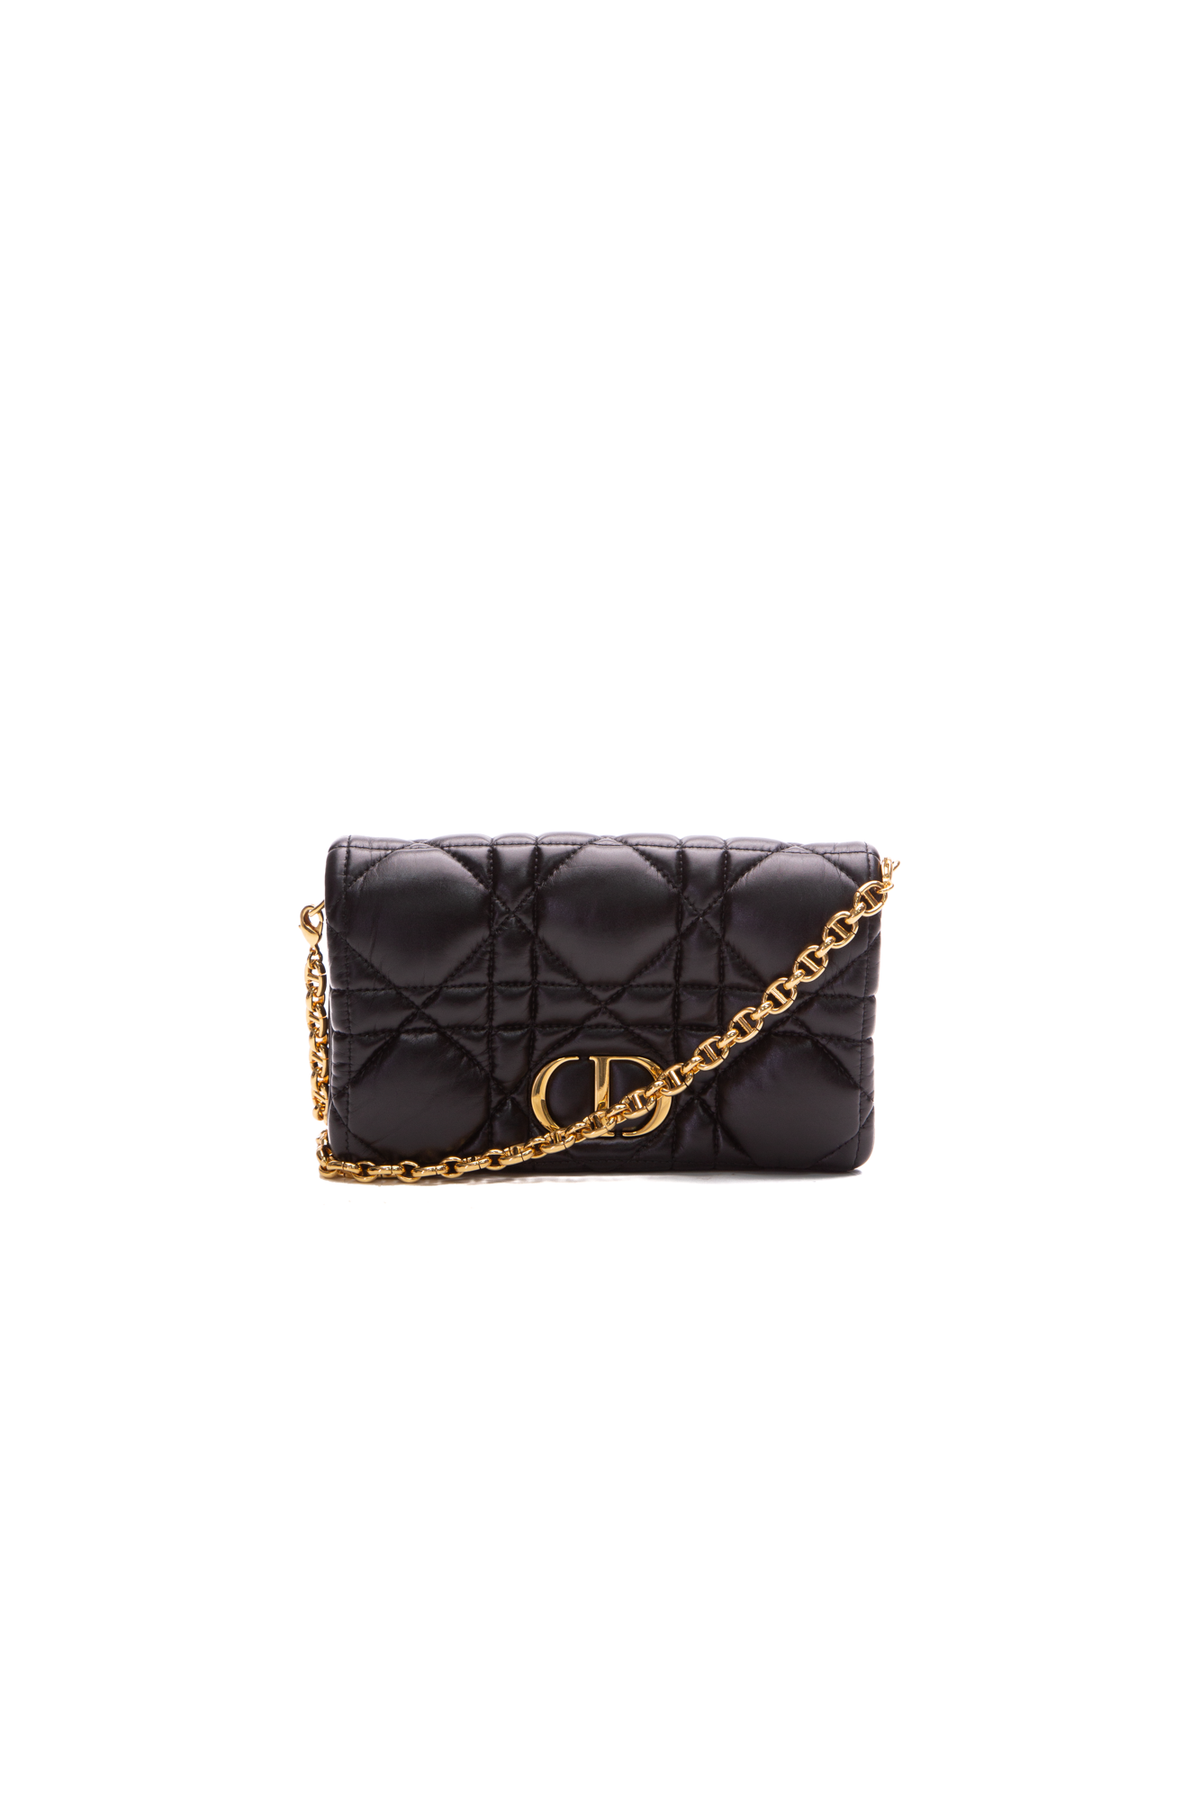 Christian Dior Caro Macrocannage Mini Bag - Couture USA